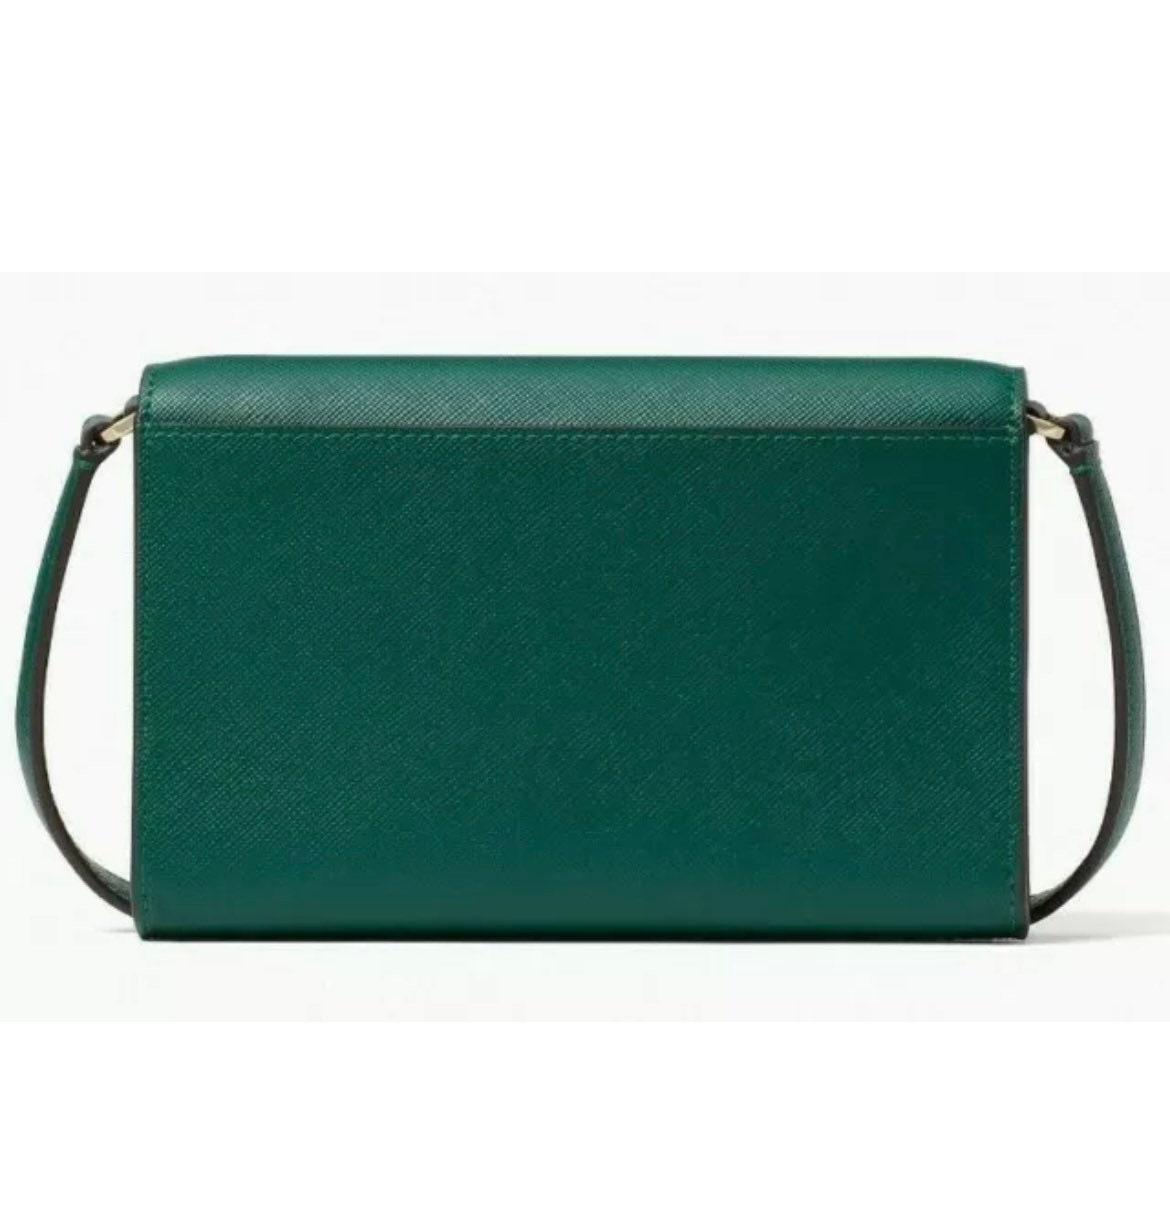 Kate Spade New York Essex Scout Shoulder Handbag Purse Mint Green | eBay